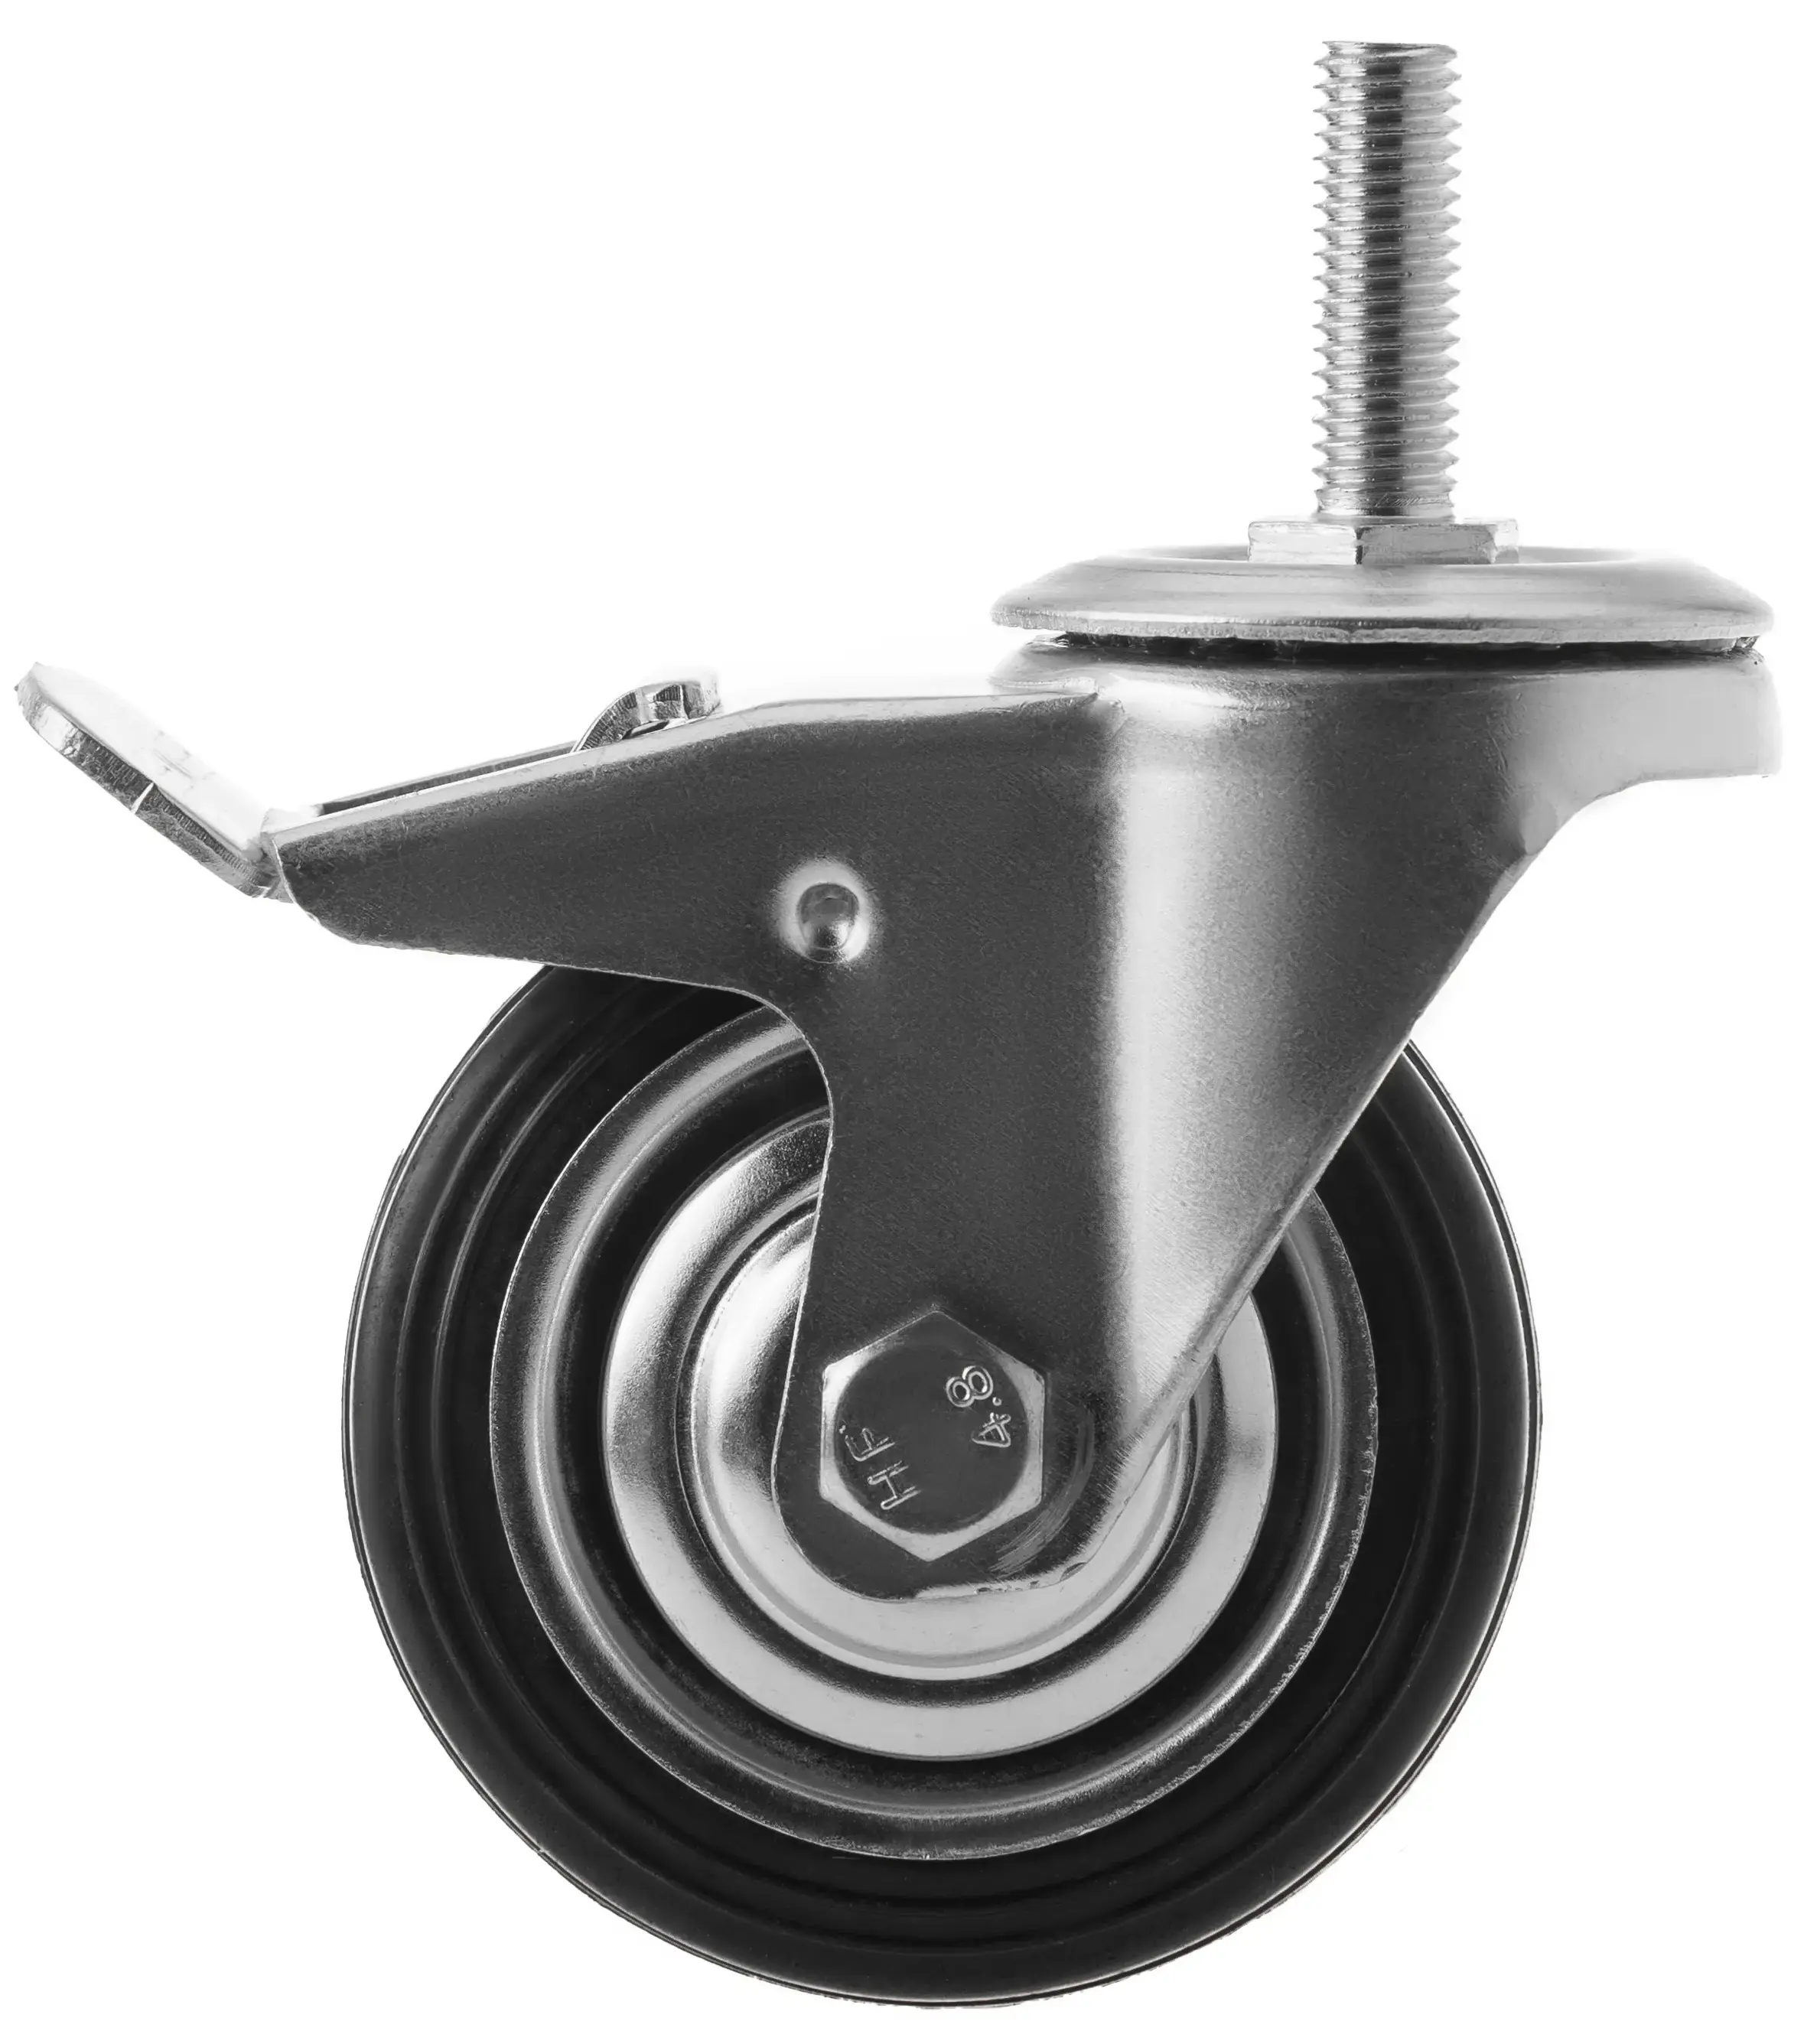 SCtb 93 - Промышленное колесо 75 мм, болт М10 (поворотн., тормоз, черн. рез., роликоподш.)